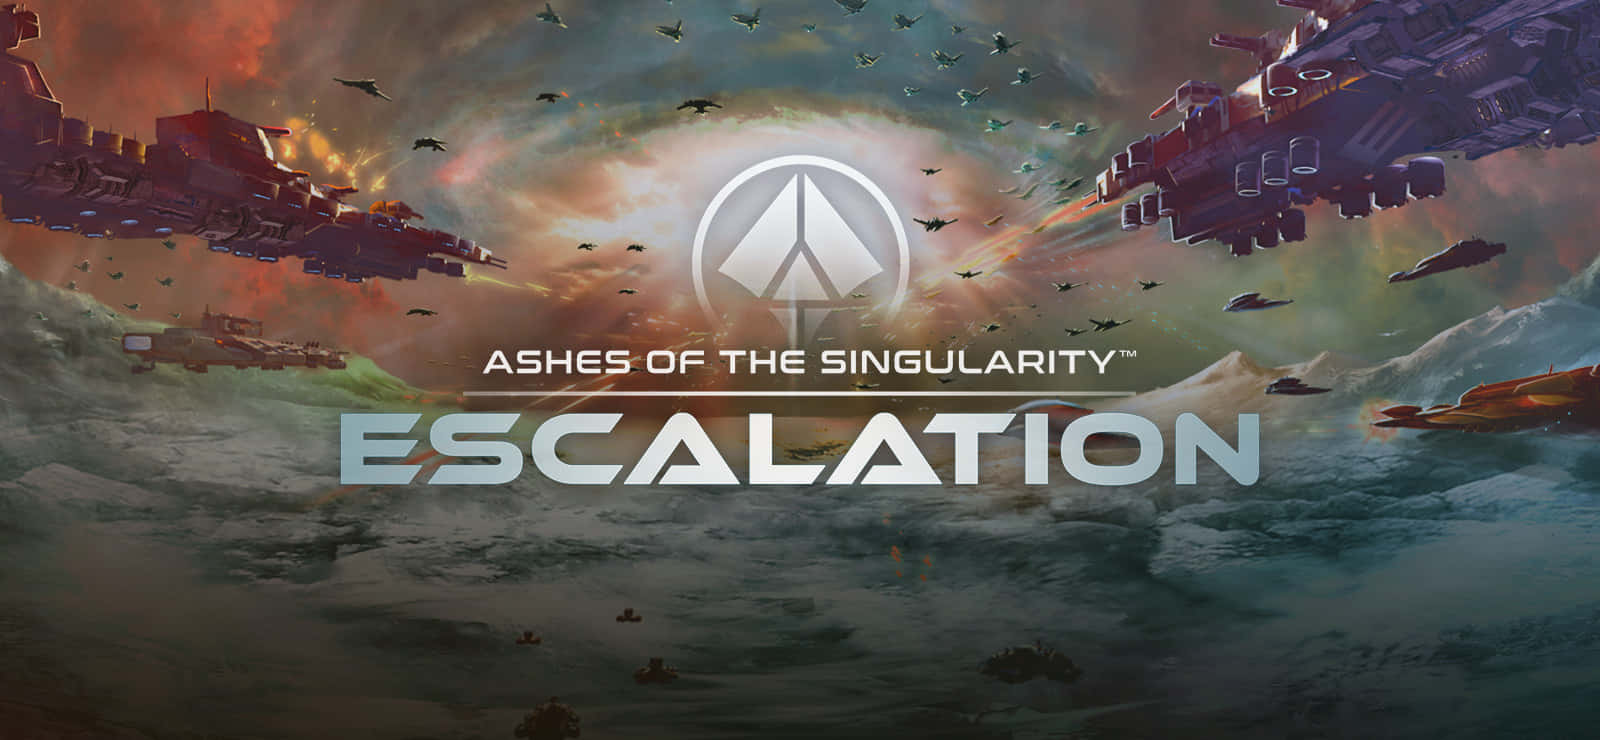 Bakgrundsbilderför Ashes Of The Singularity-spelet.